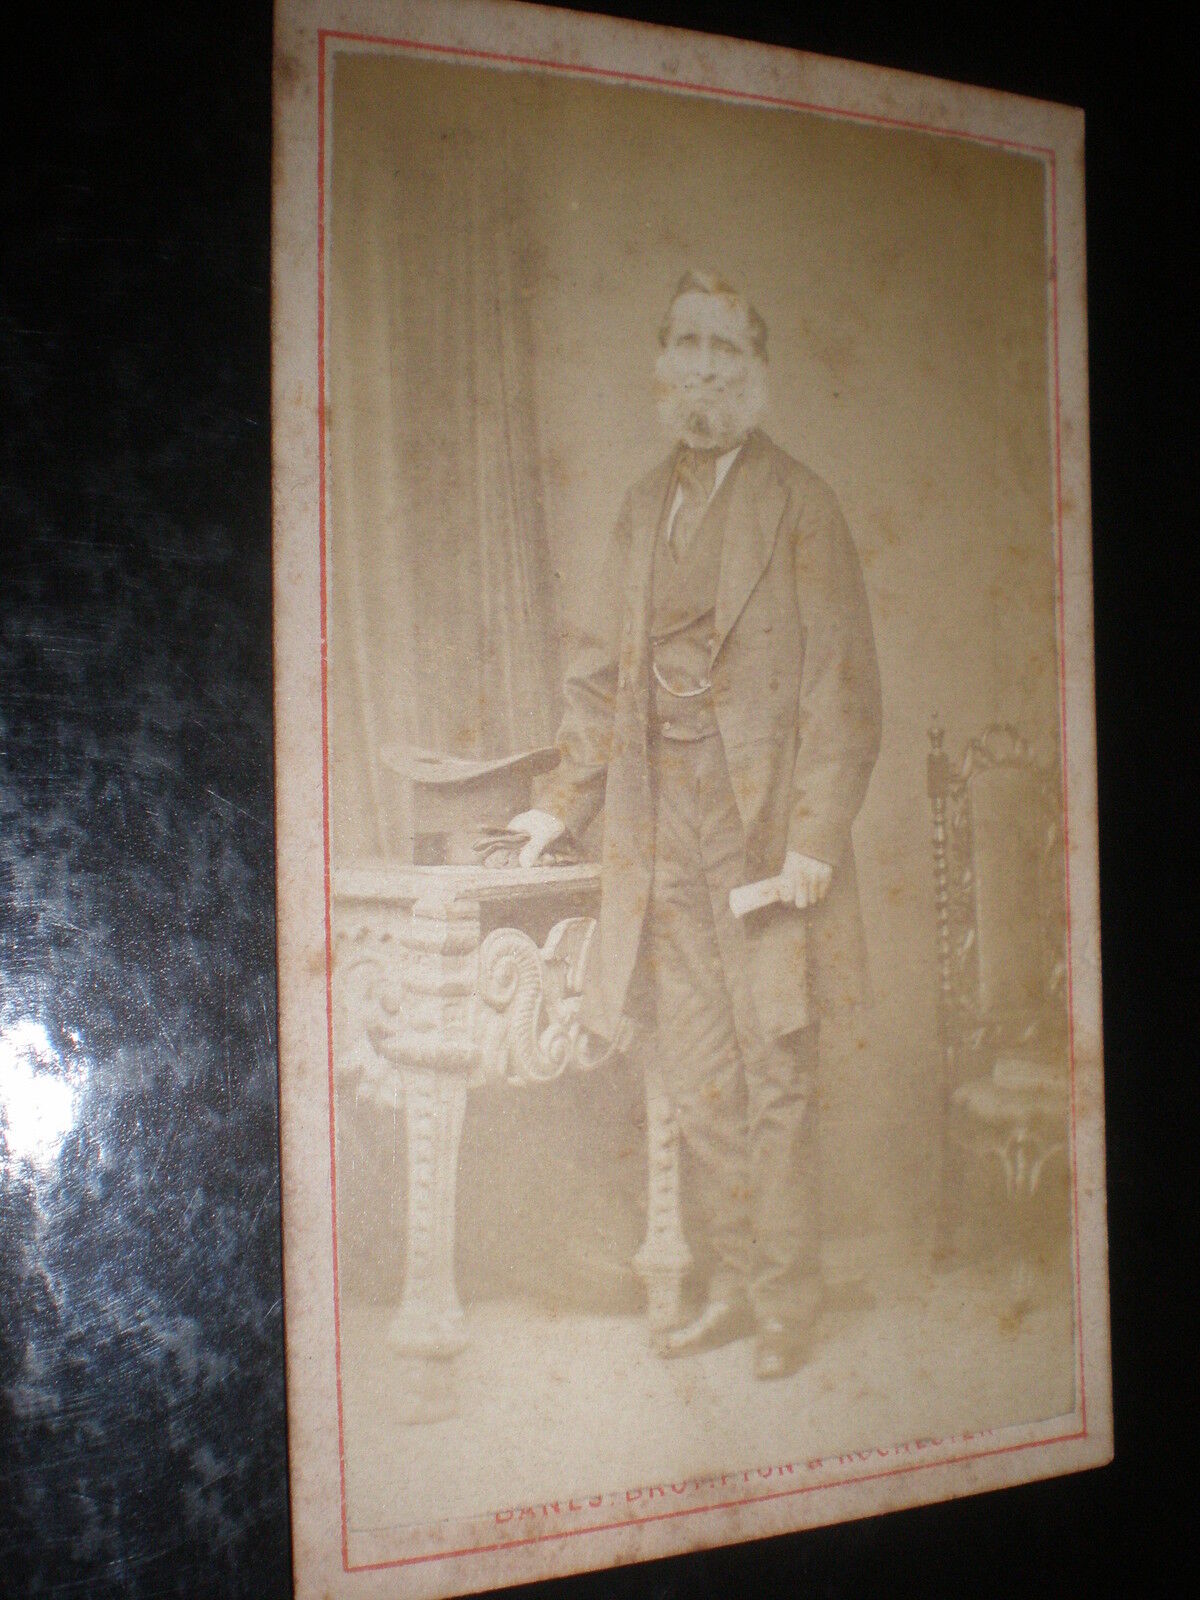 Cdv old photograph man Thomas Davison by Banks Rochester c1870s